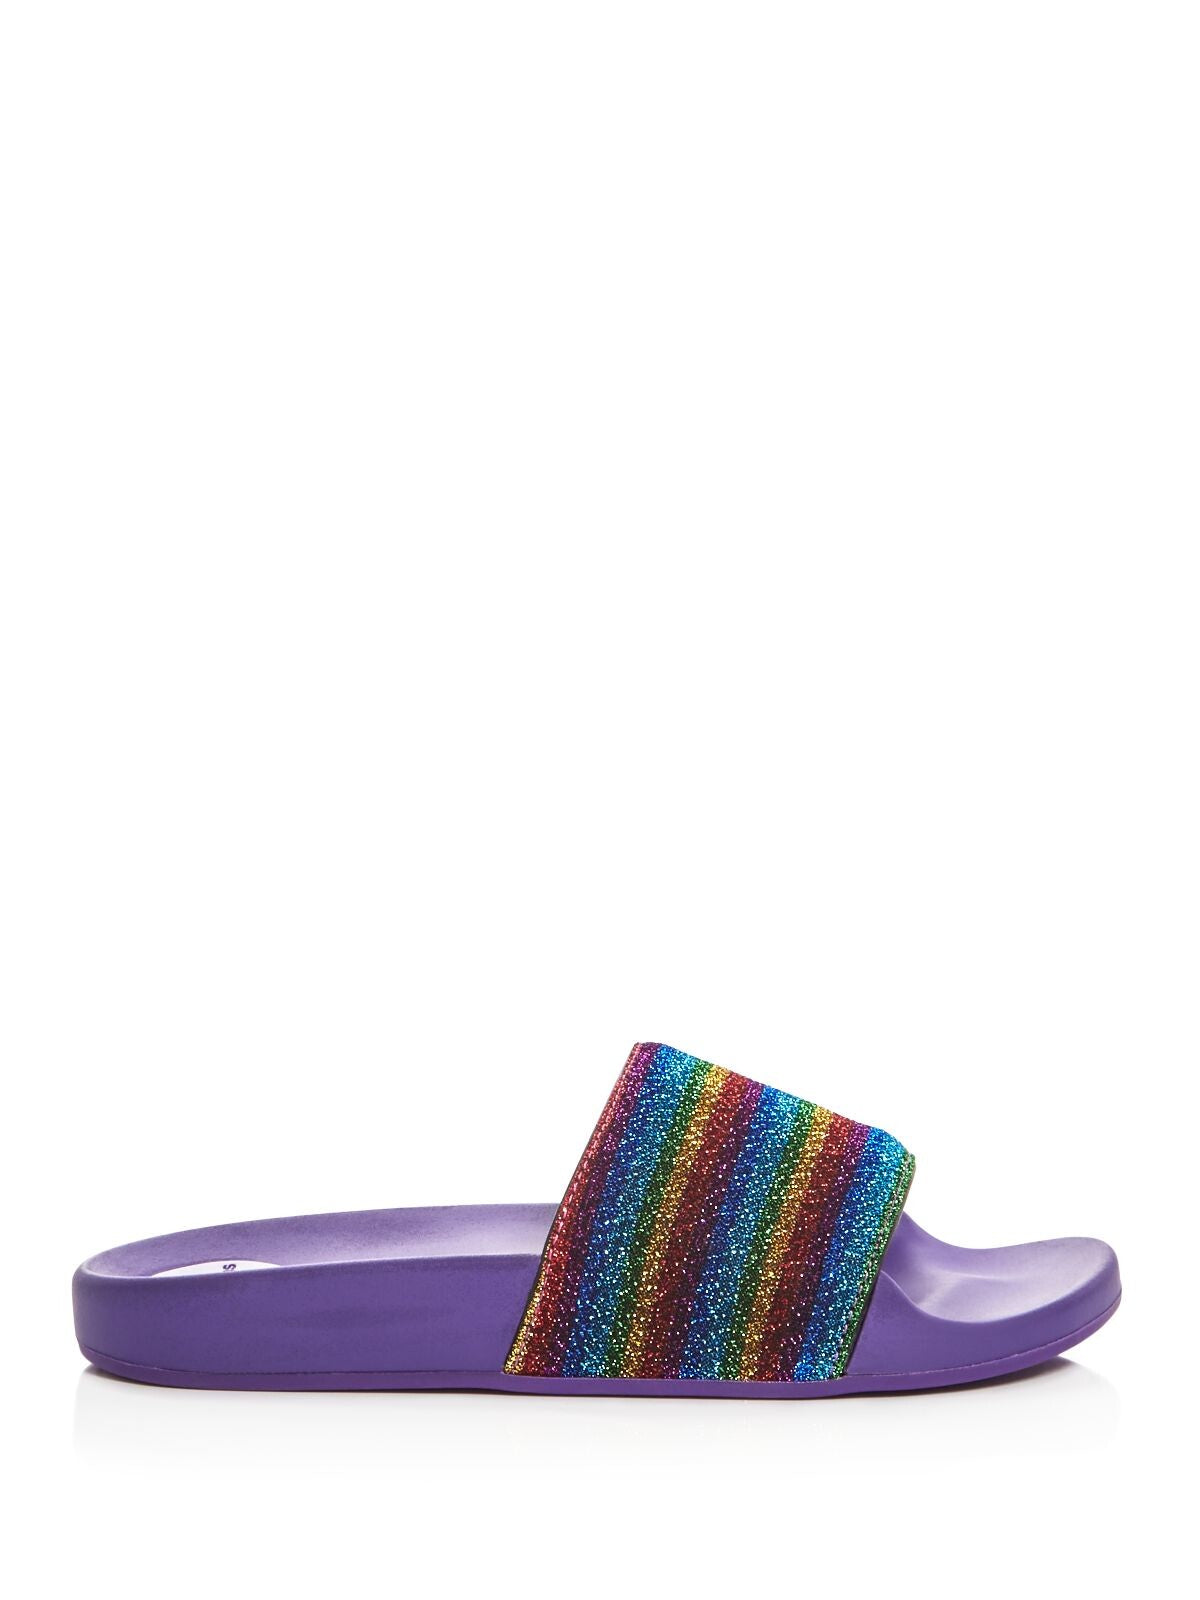 MARC JACOBS Womens Purple Striped Comfort Cooper Round Toe Platform Slip On Slide Sandals Shoes 35